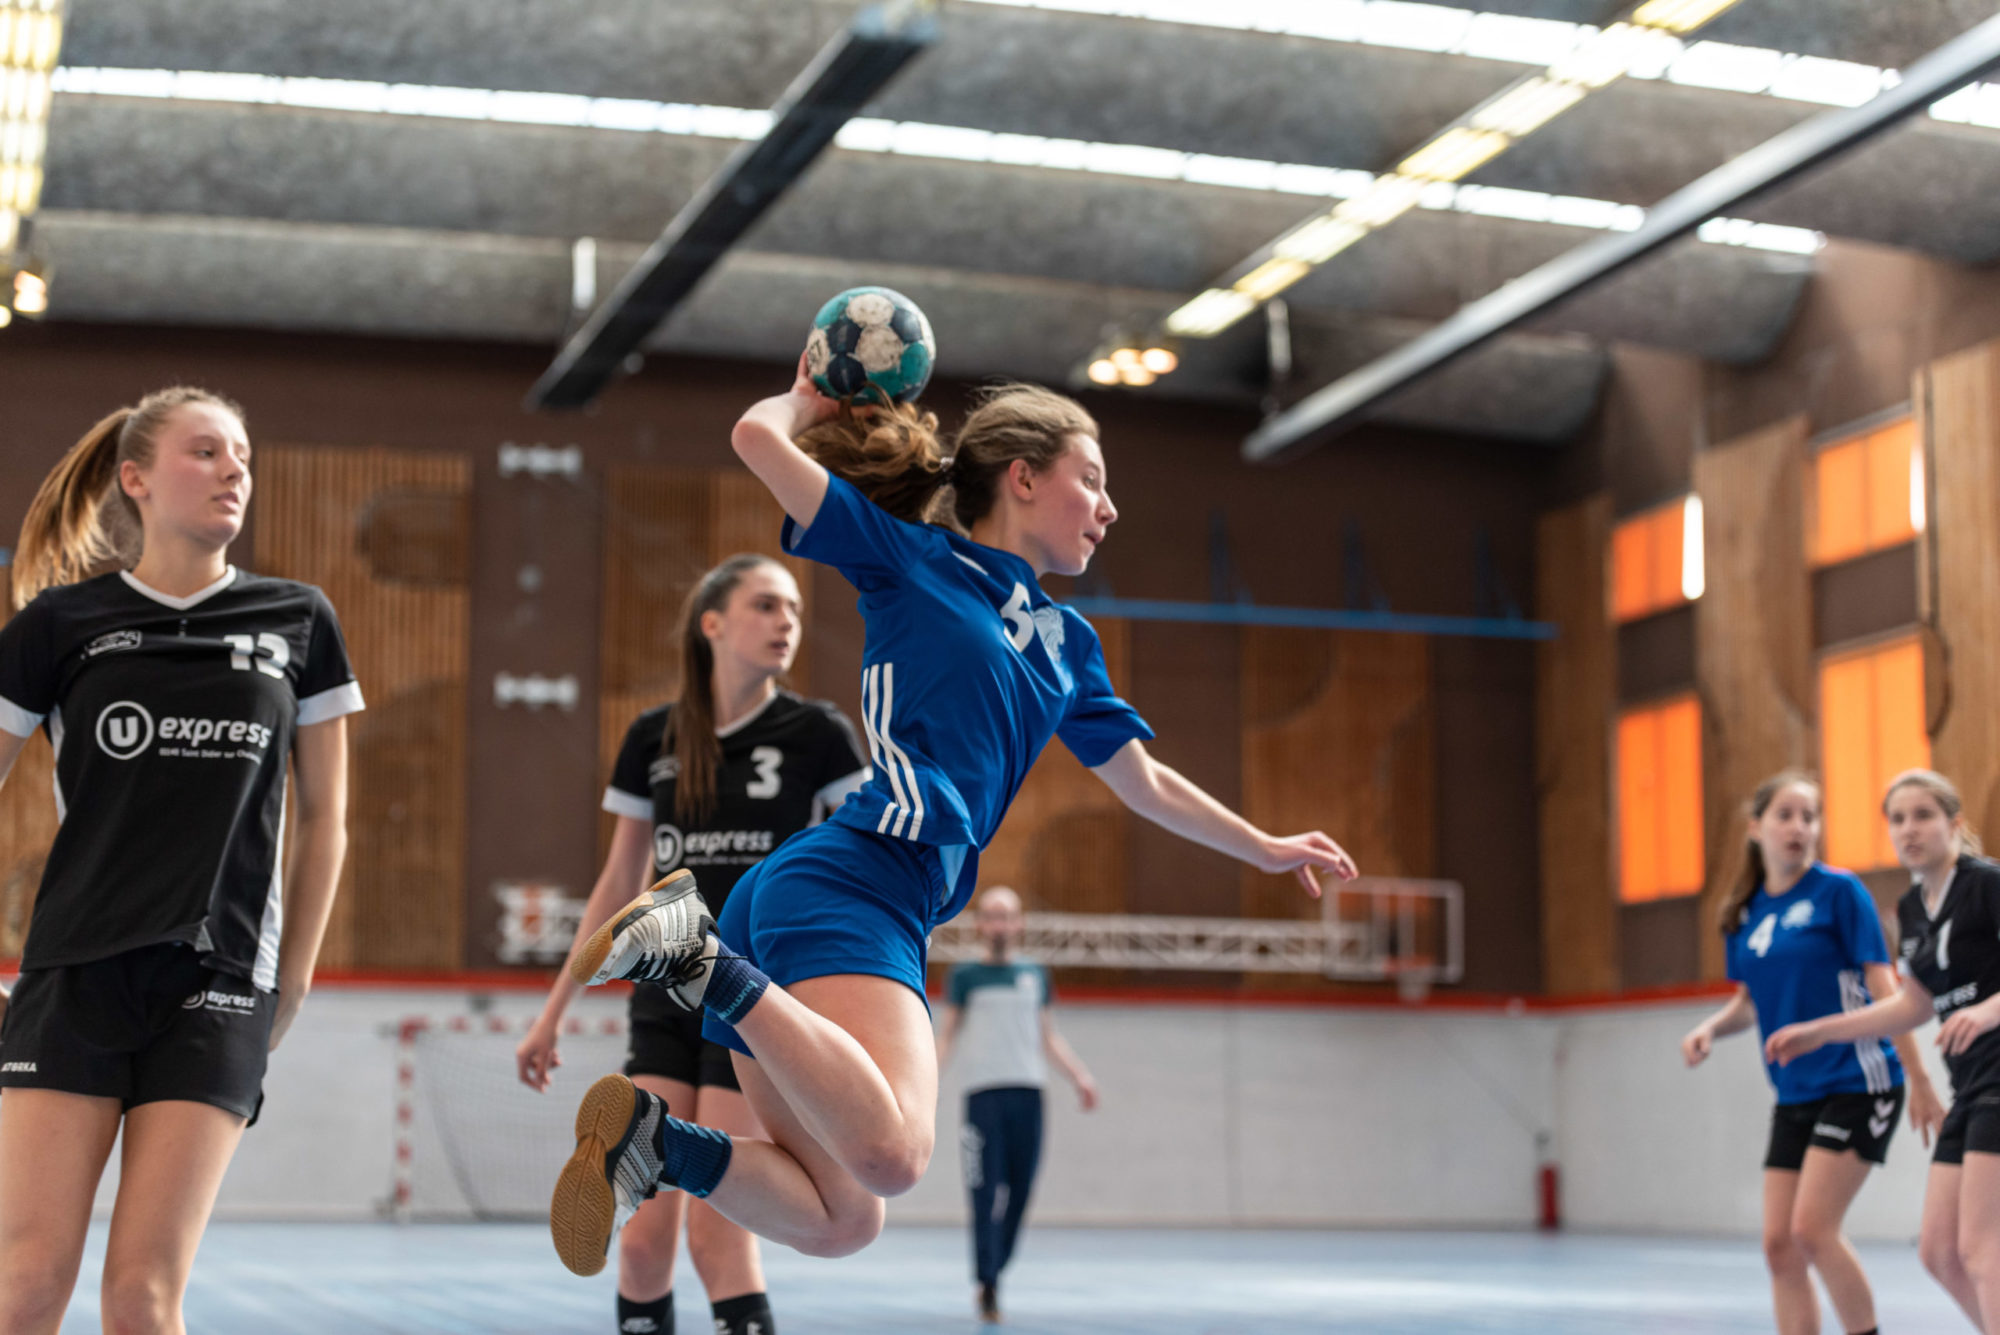 Reportage photo handball sport photographe